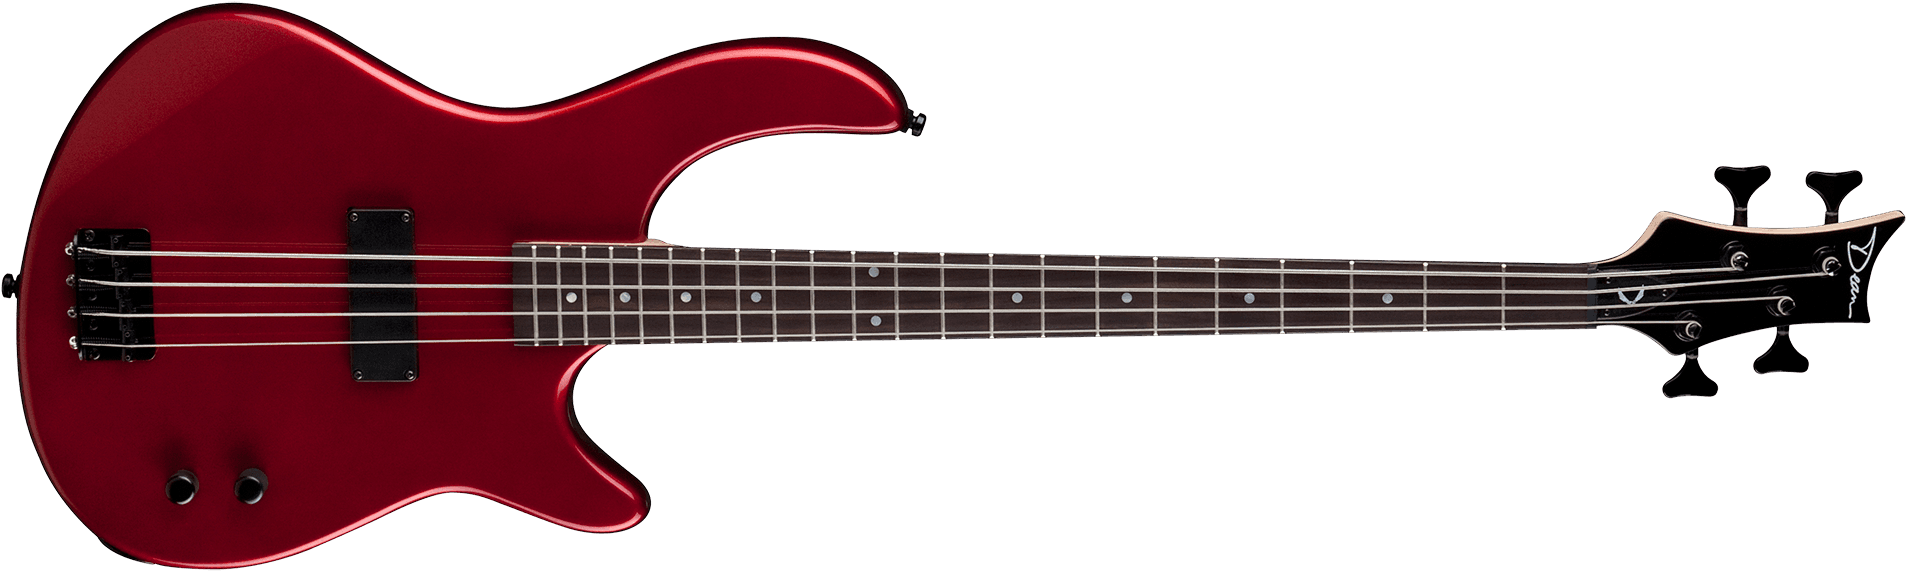 Luna Guitars Acoustic Bass (2000x684)